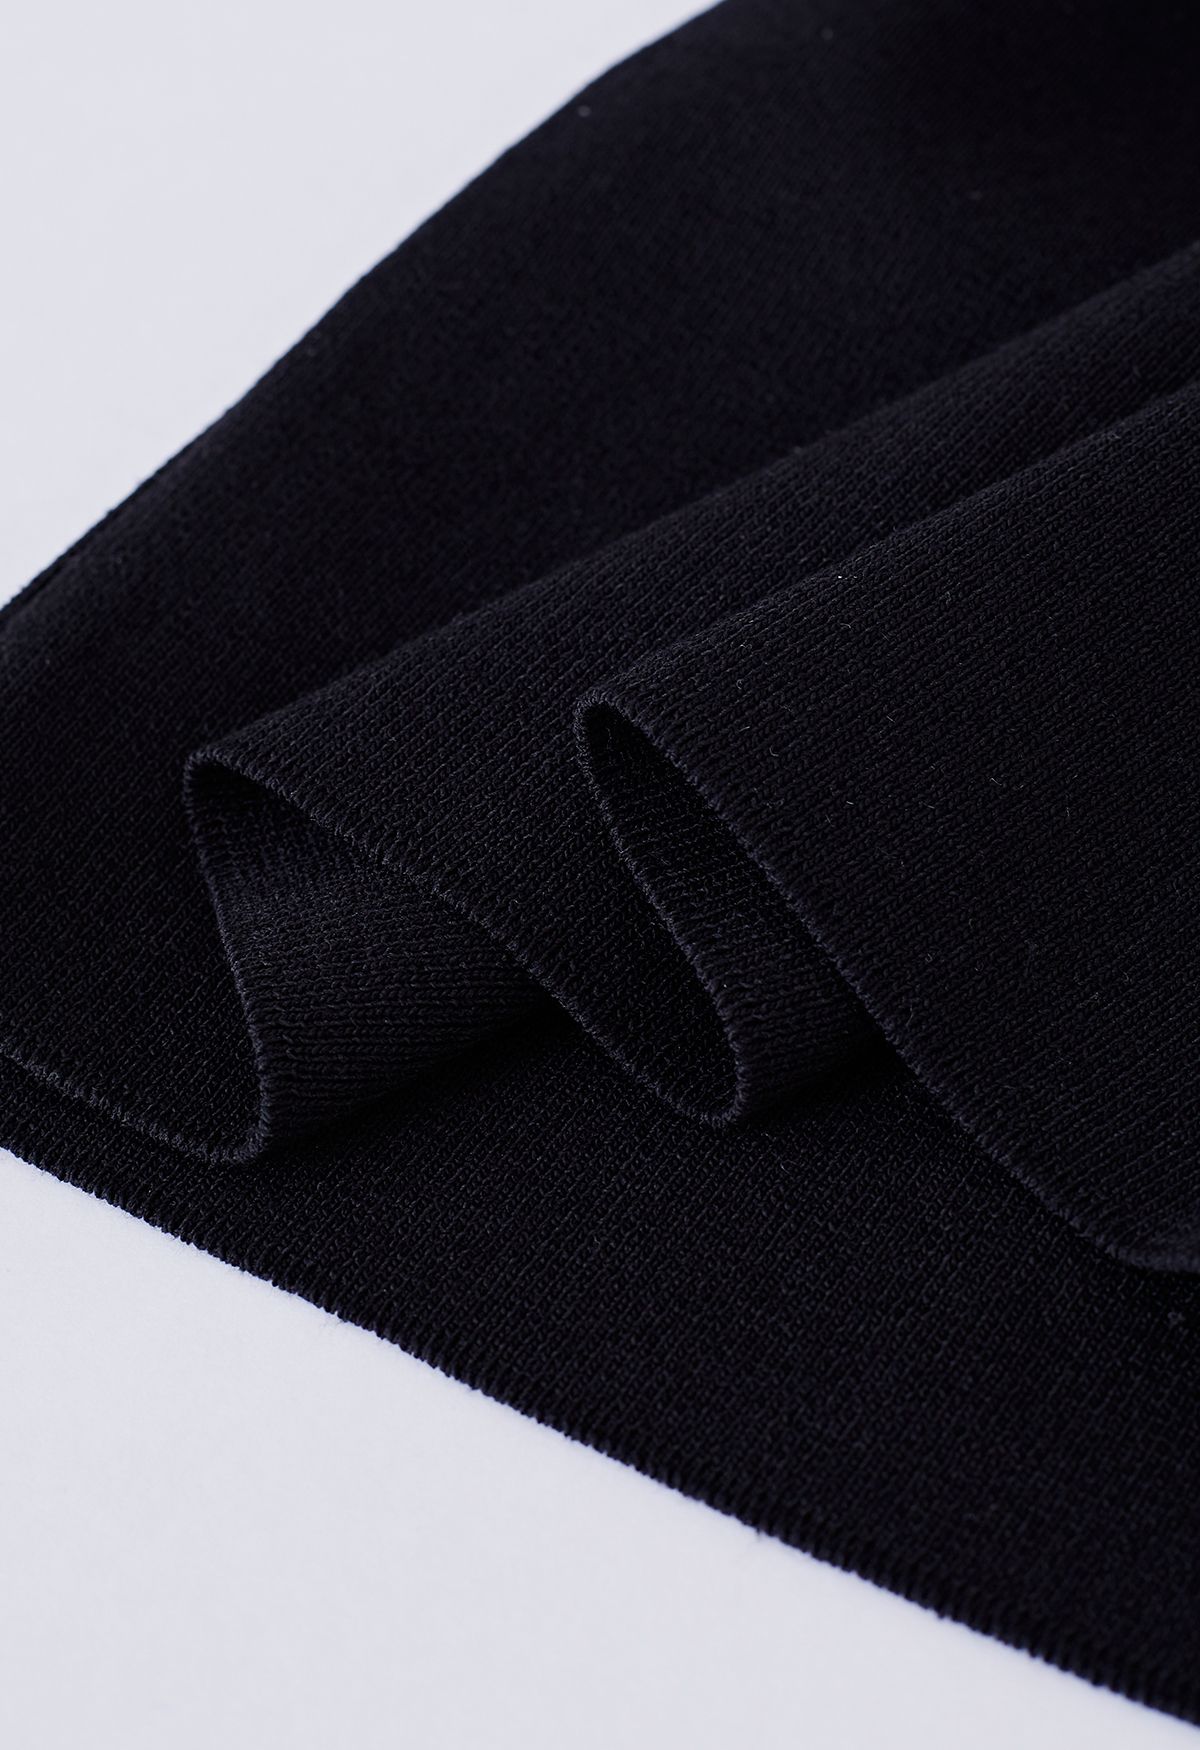 Asymmetric Halter Neck Knit Crop Top in Black